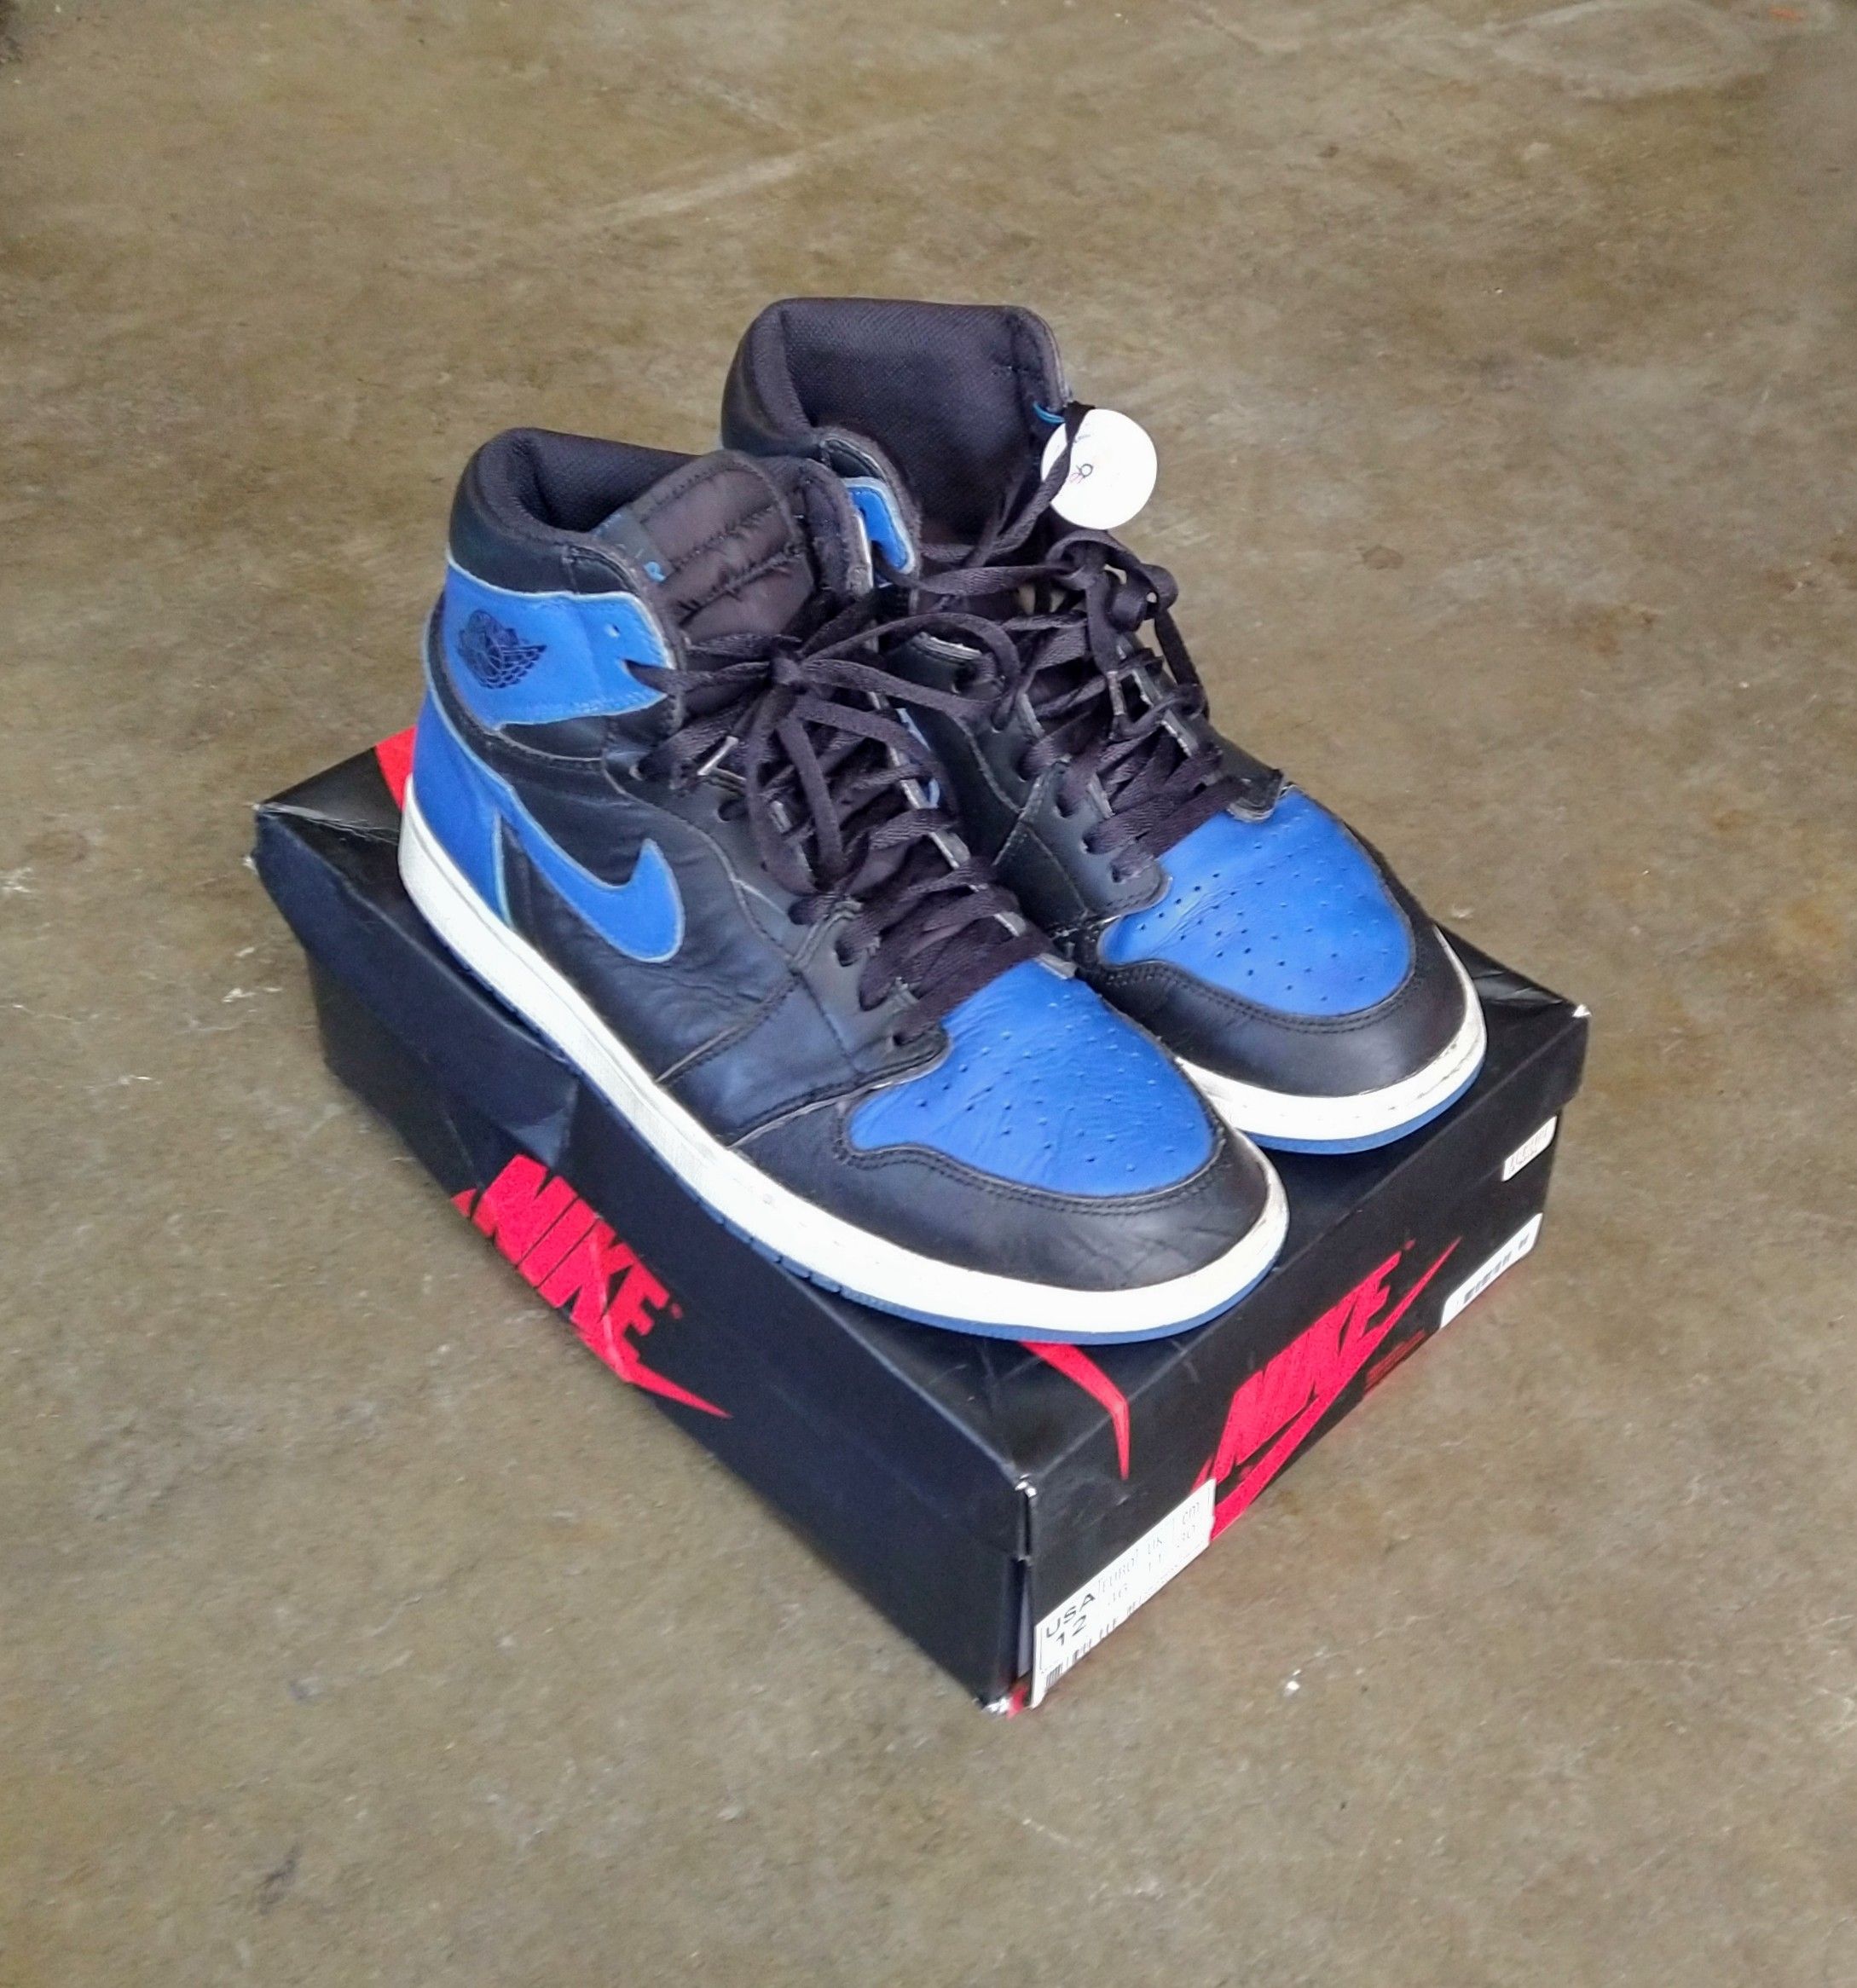 Pre-owned Jordan Nike Air Jordan 1 High Og Royal Size 12 (2017) Black Blue Shoes In Blue/black